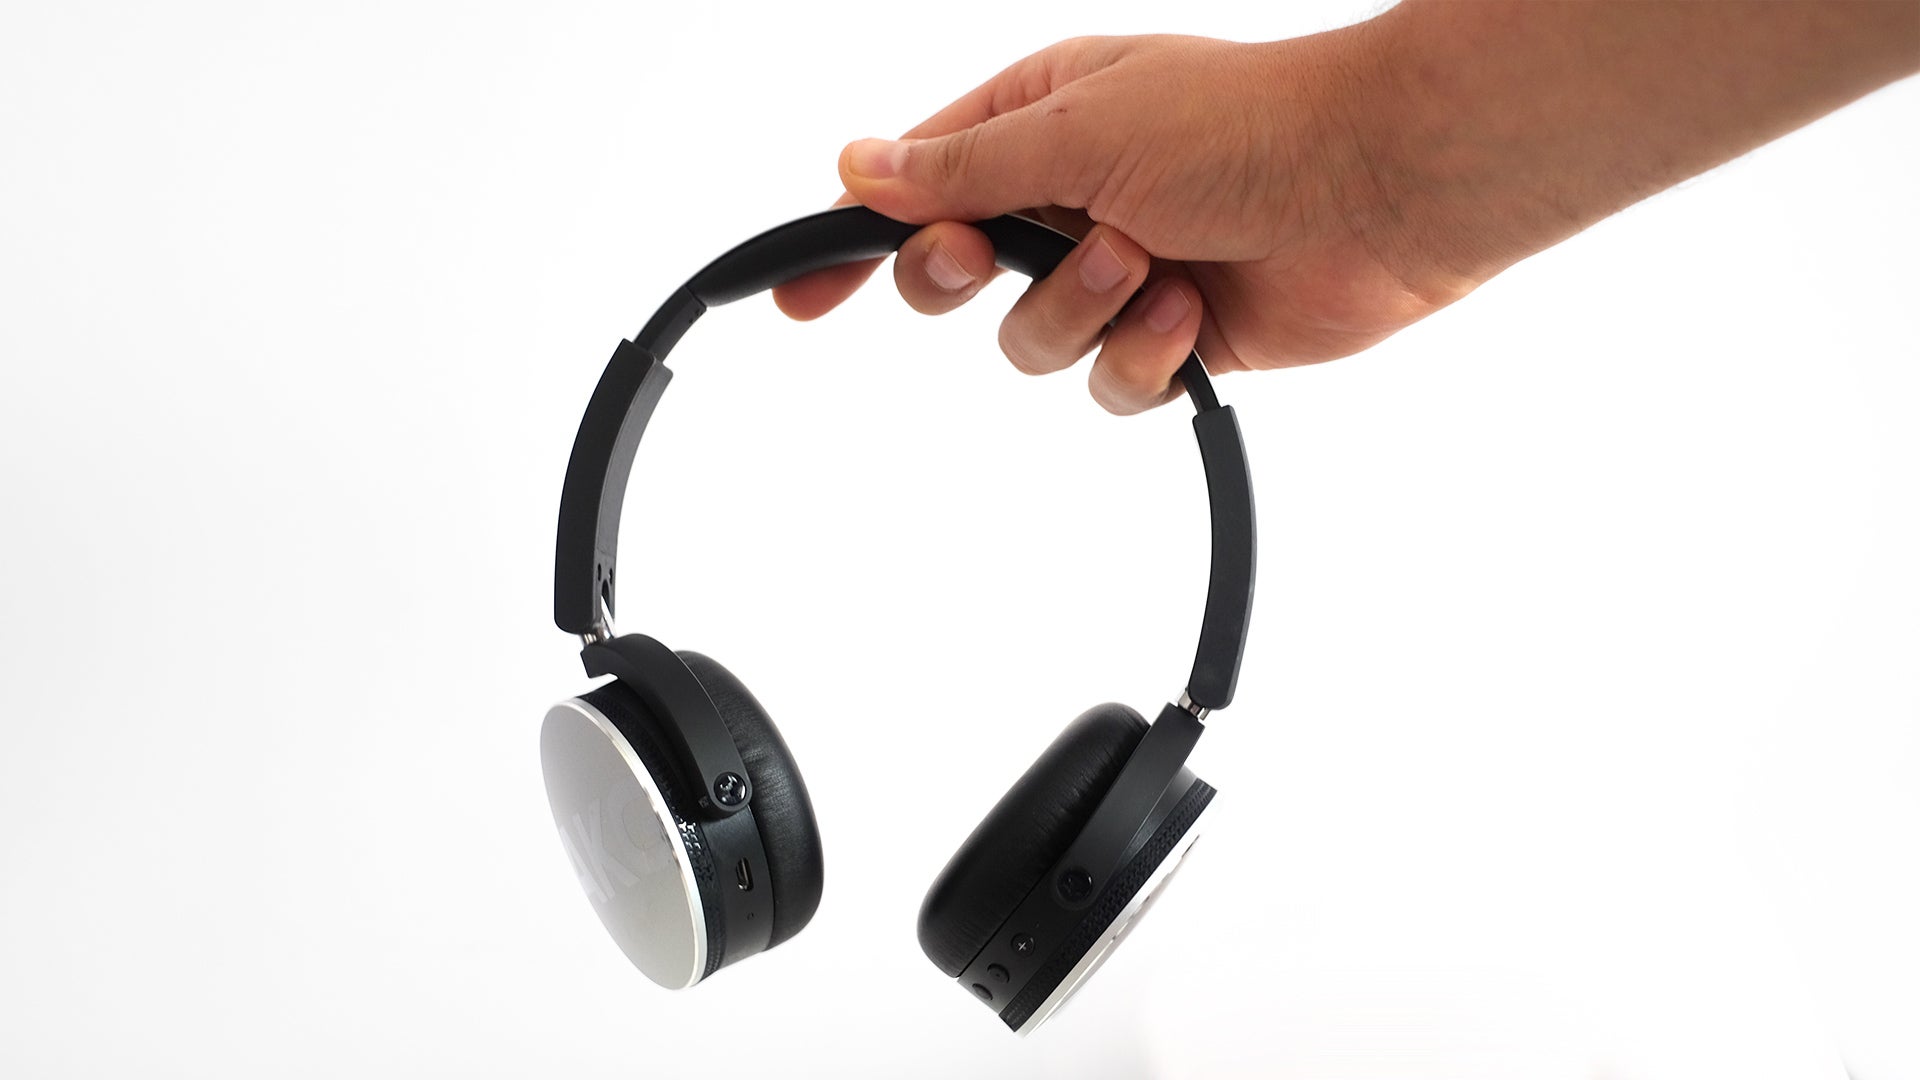 Hand holding black AKG Y50BT wireless headphones.Hand holding black AKG Y50BT wireless headphones against white background.